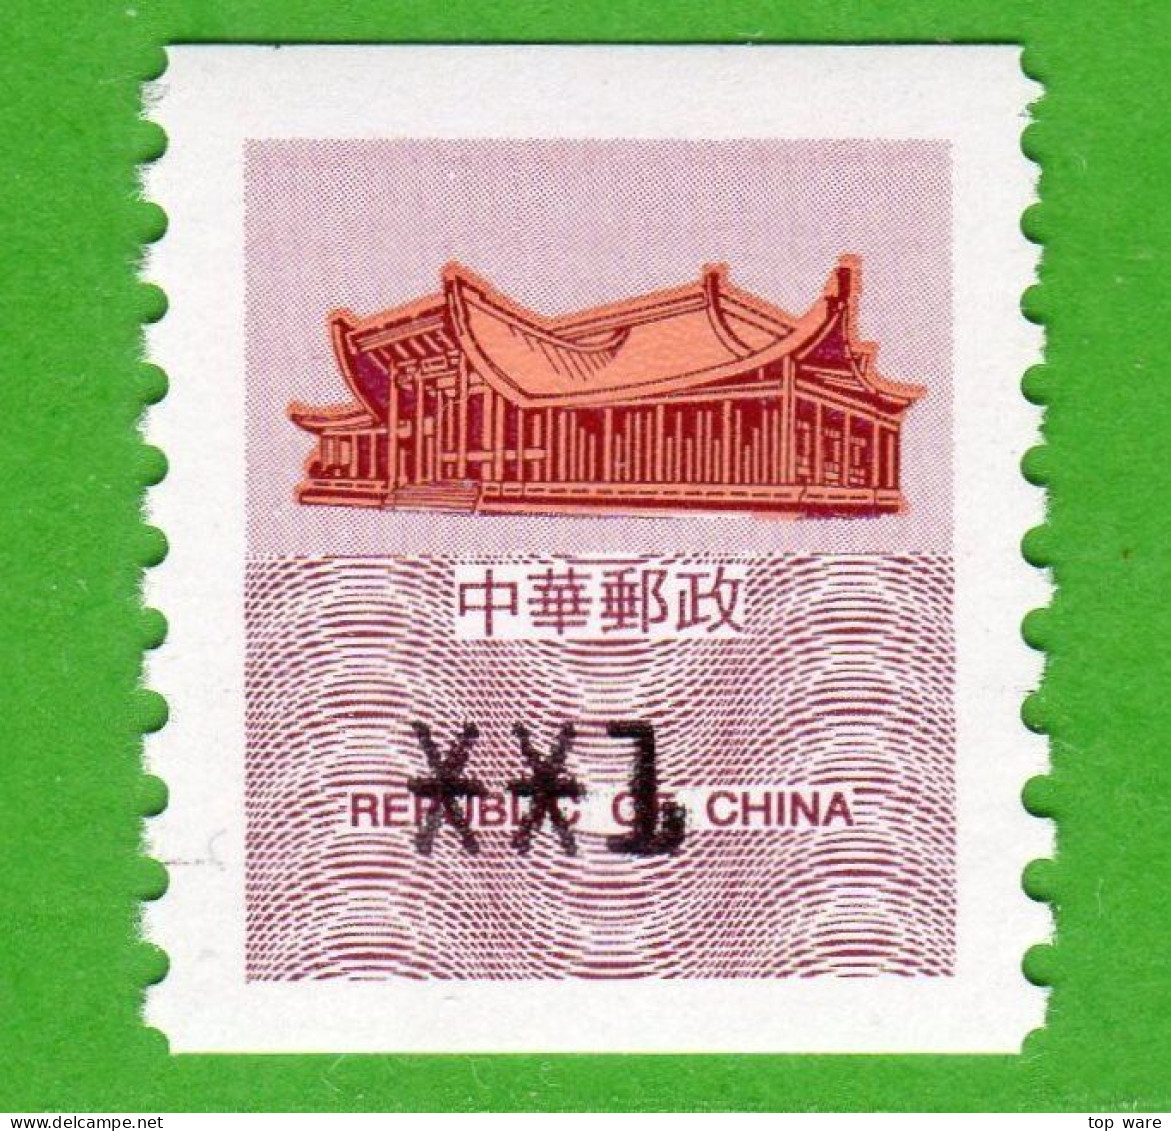 1995 Automatenmarken China Taiwan Sun-Yatsen Memorial Hall / Michel 1 / ATM Xx1 MNH / Unisys Kiosk Etiquetas Automatici - Automatenmarken